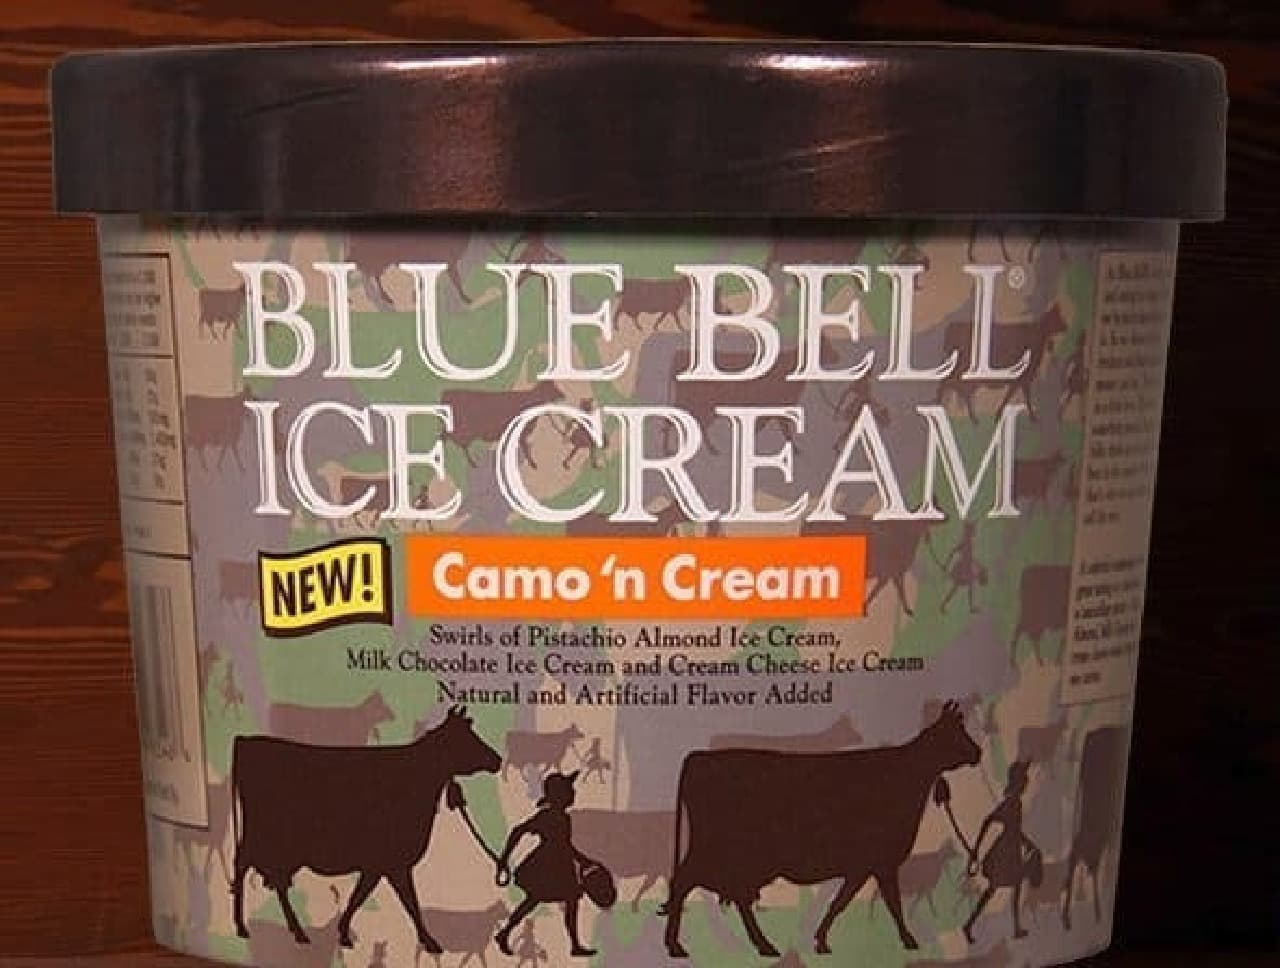 Camouflage ice cream "Camo'n Cream"